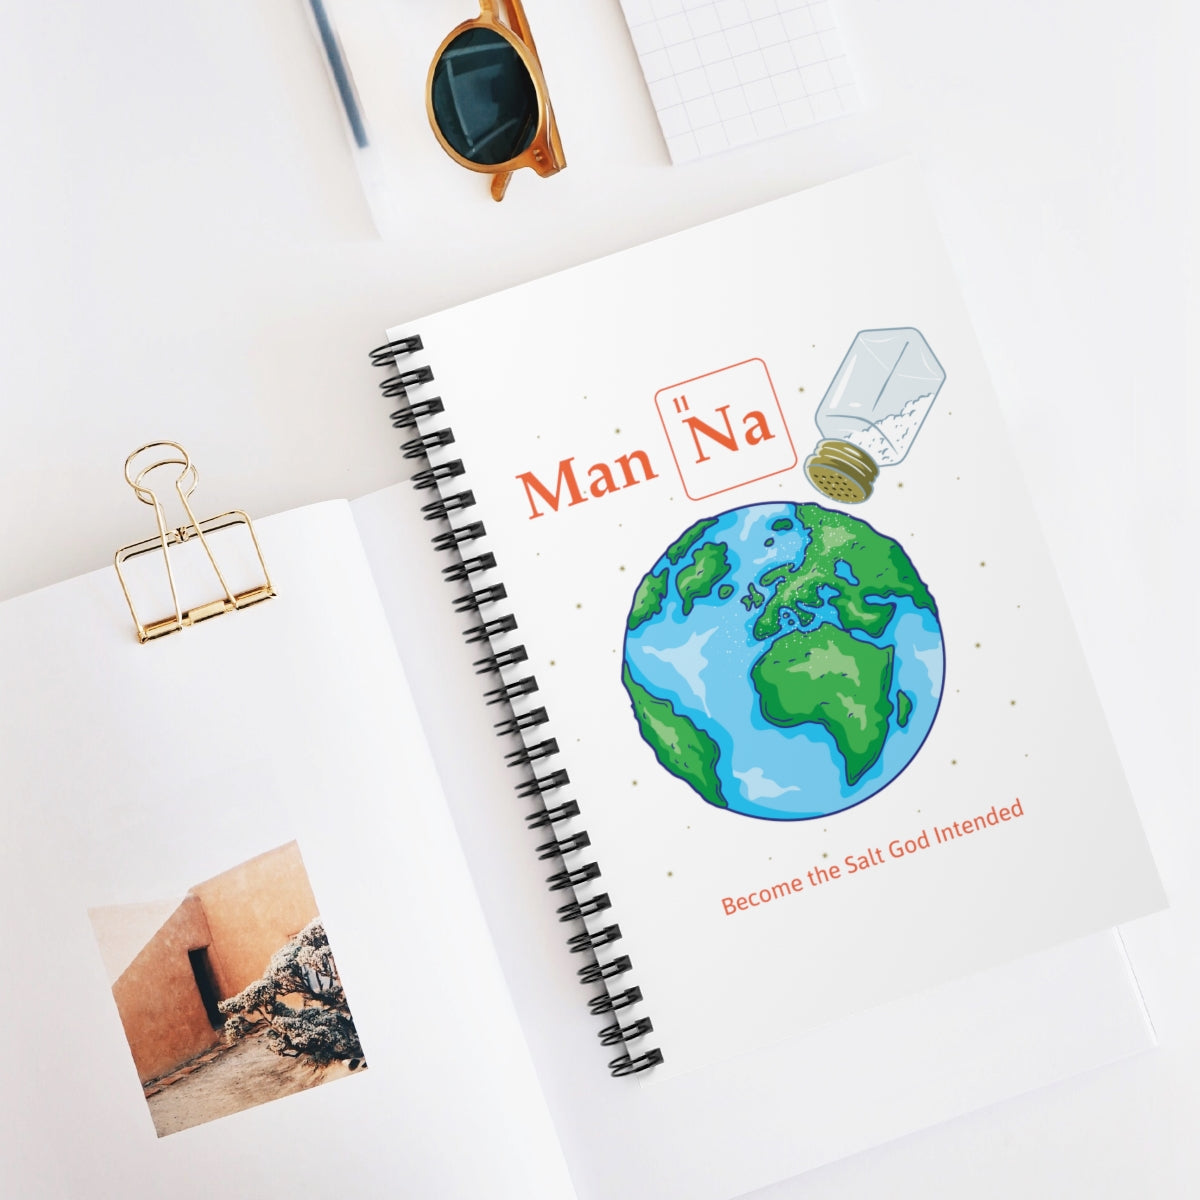 Man Na - Spiral Notebook - Ruled Line